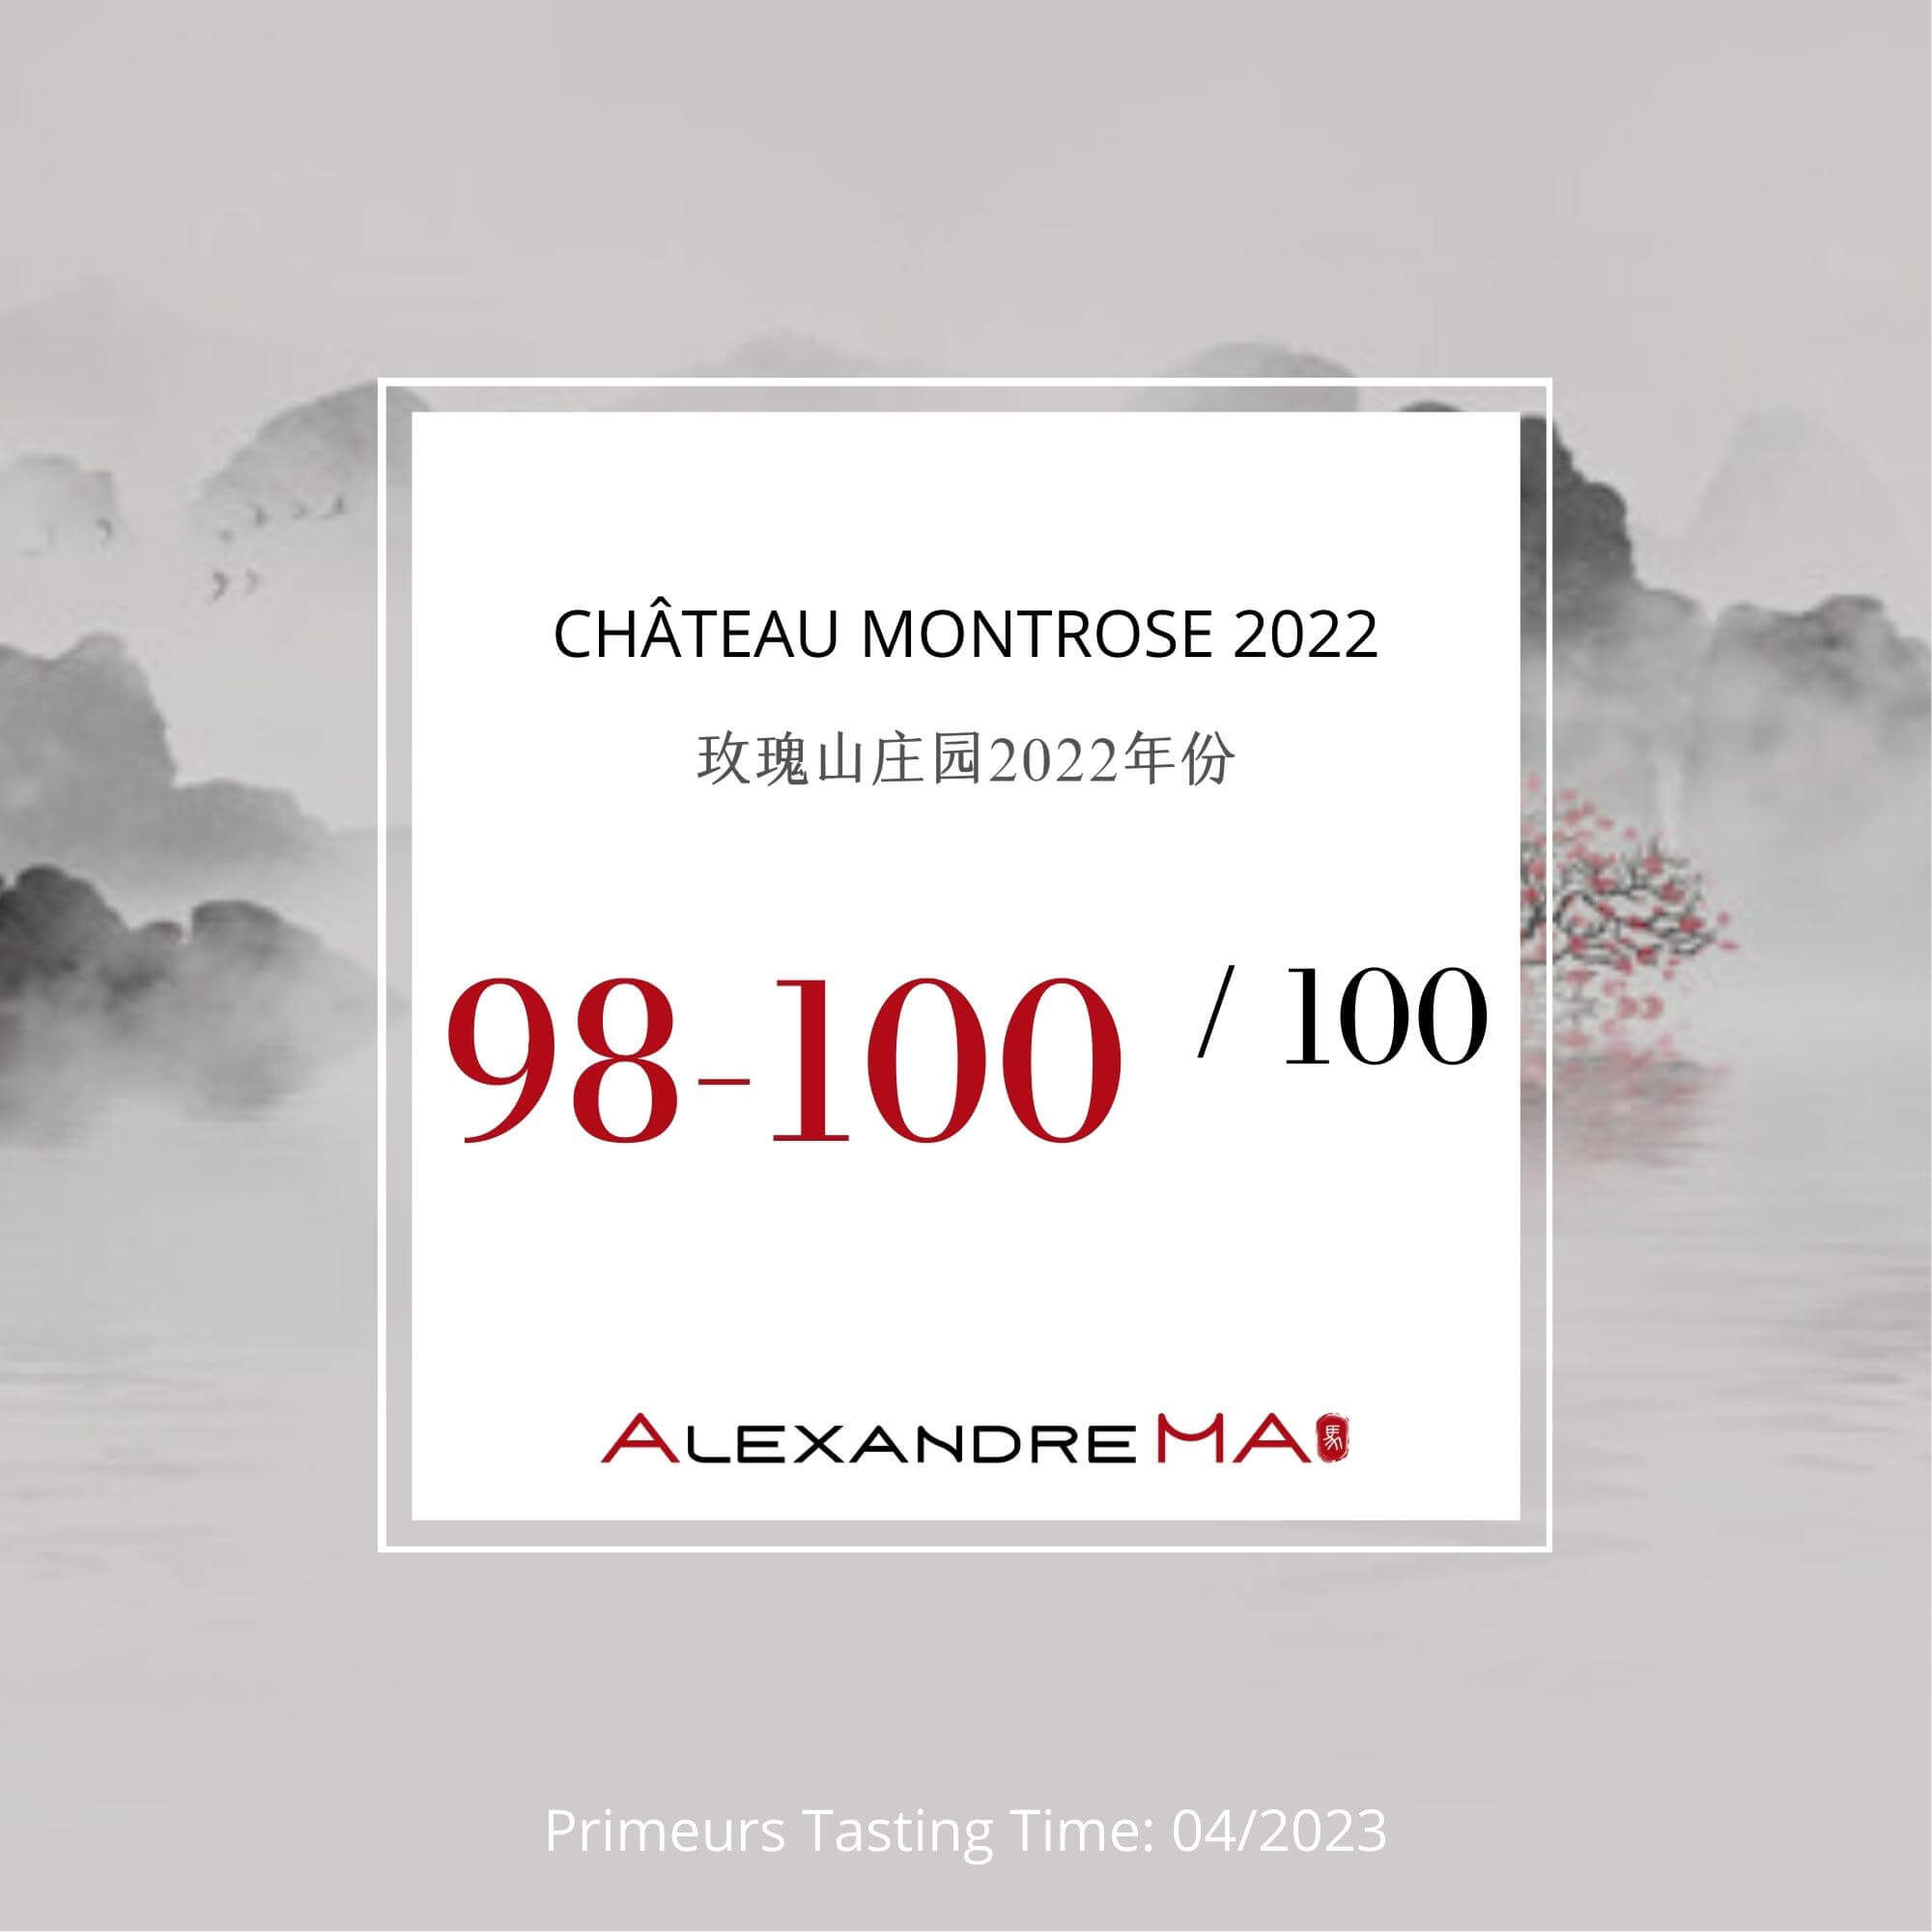 Château Montrose 2022 Primeurs - Alexandre MA